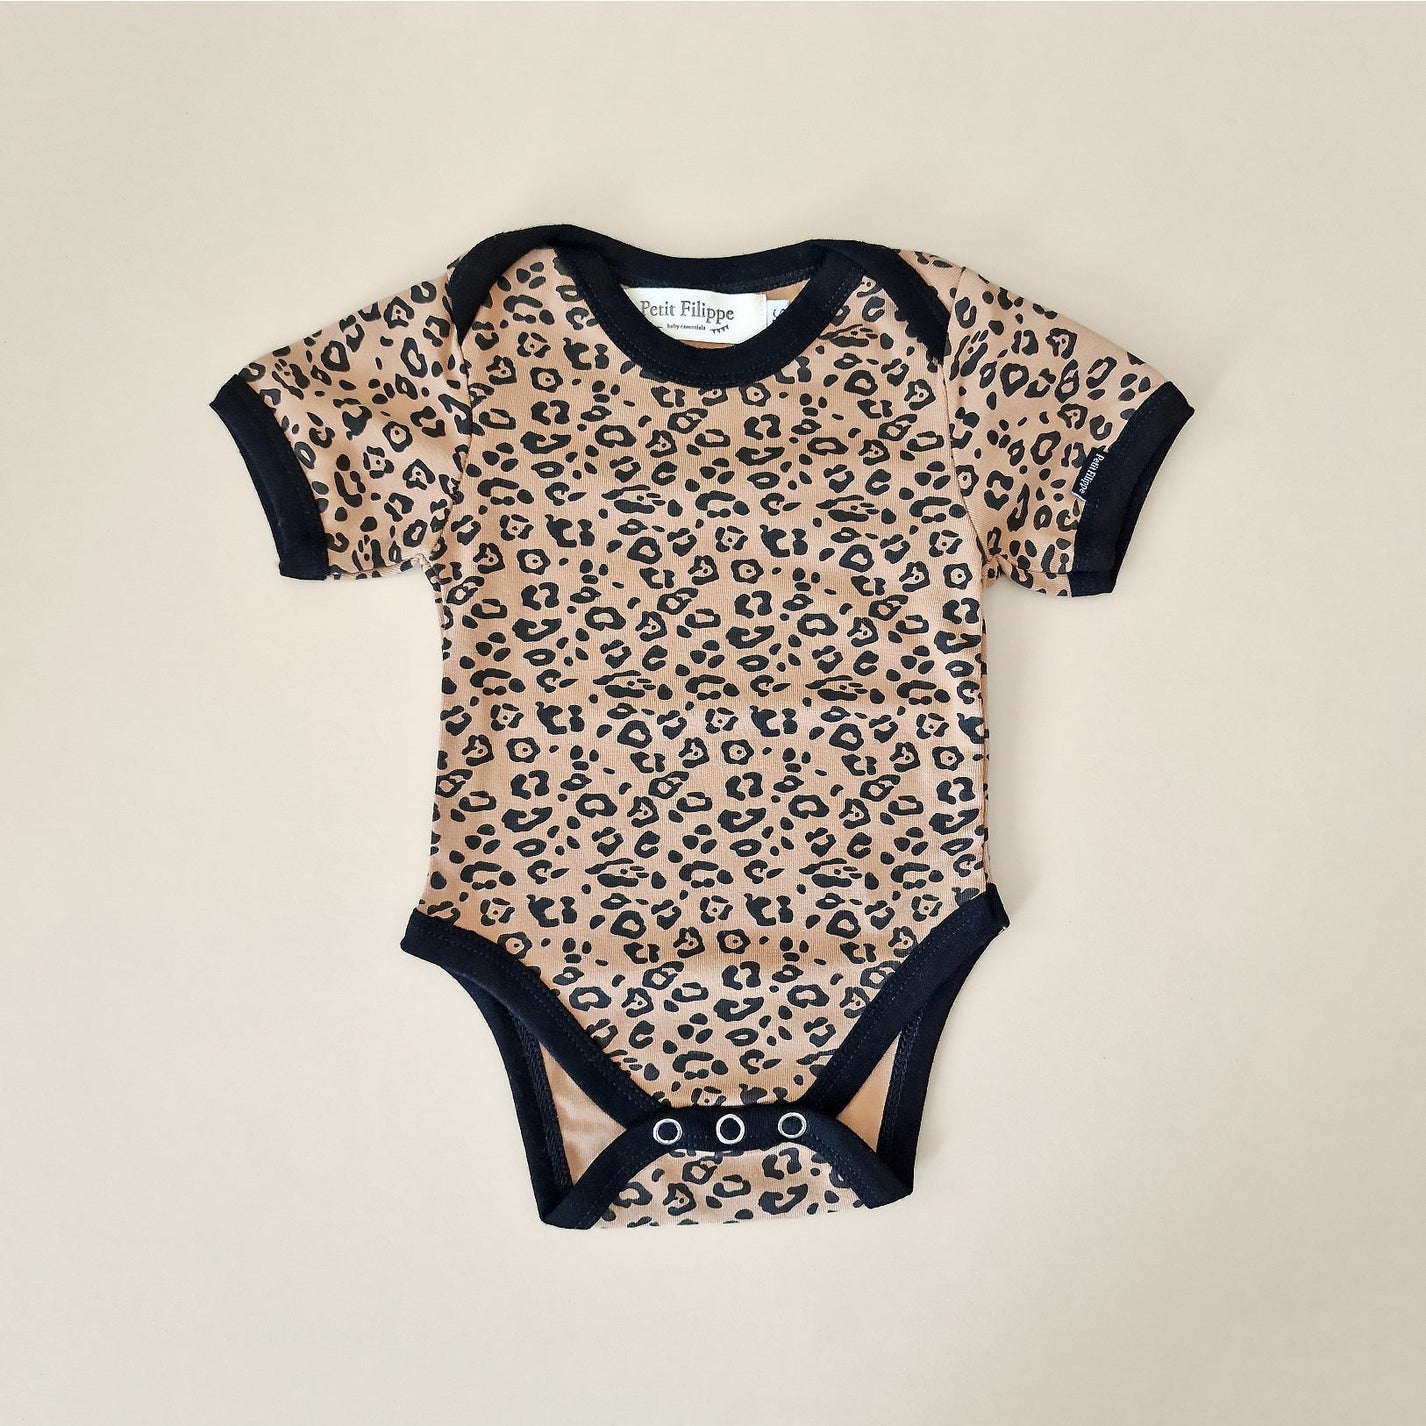 Baby Bodysuit - Short Sleeves - Leopard | Petit Filippe